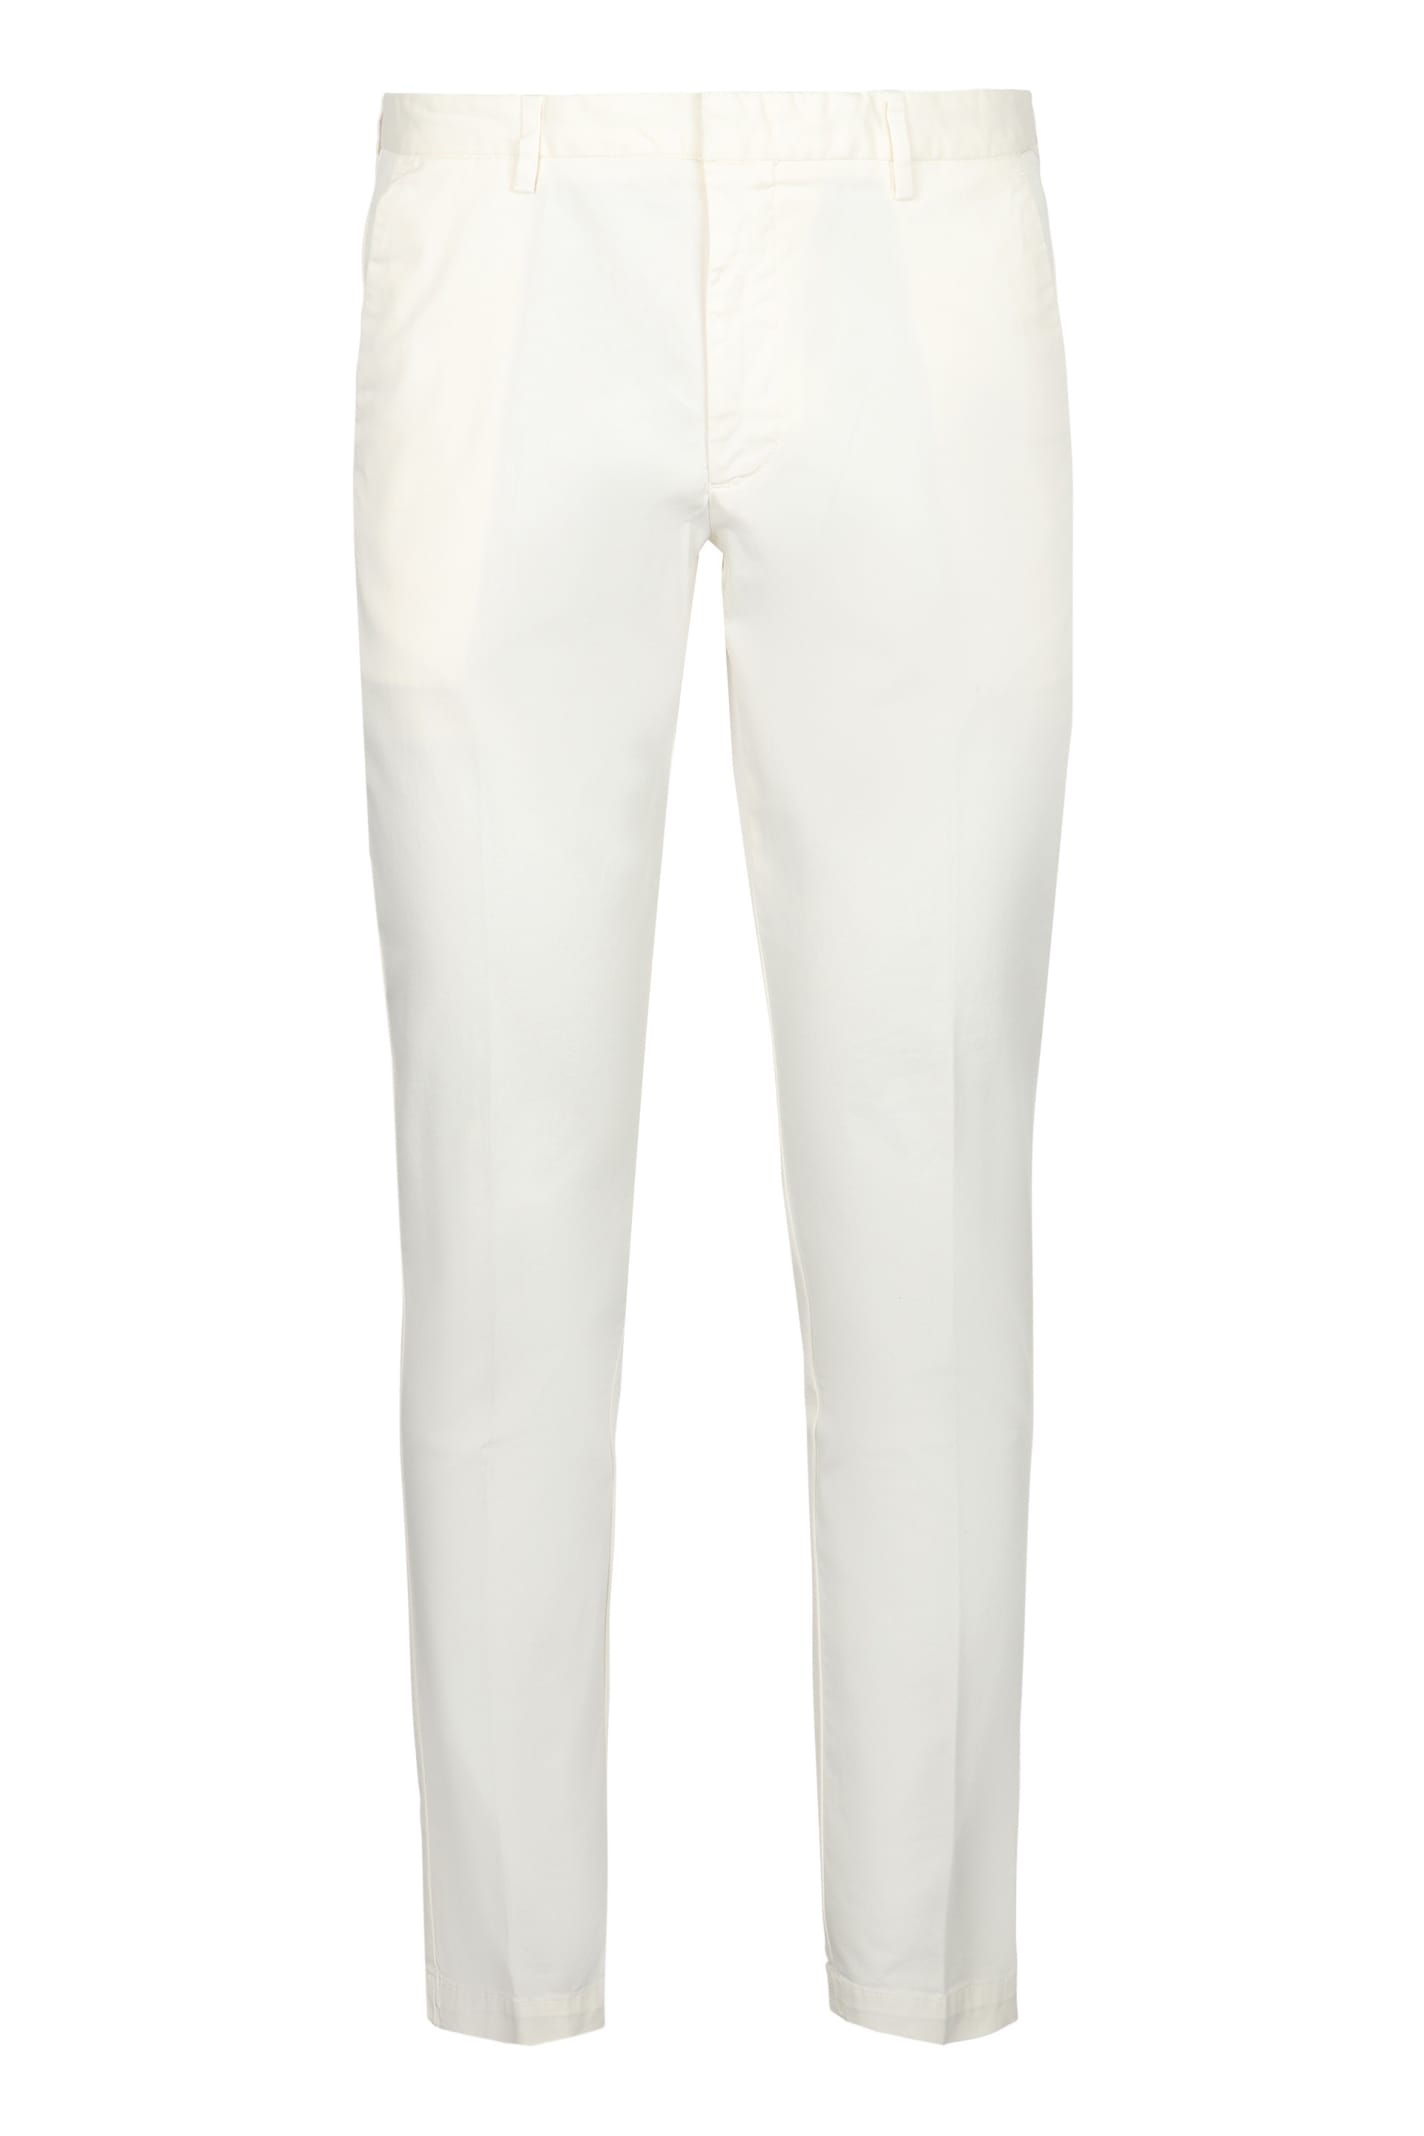 Hugo Boss Kaito1 Stretch Cotton Trousers